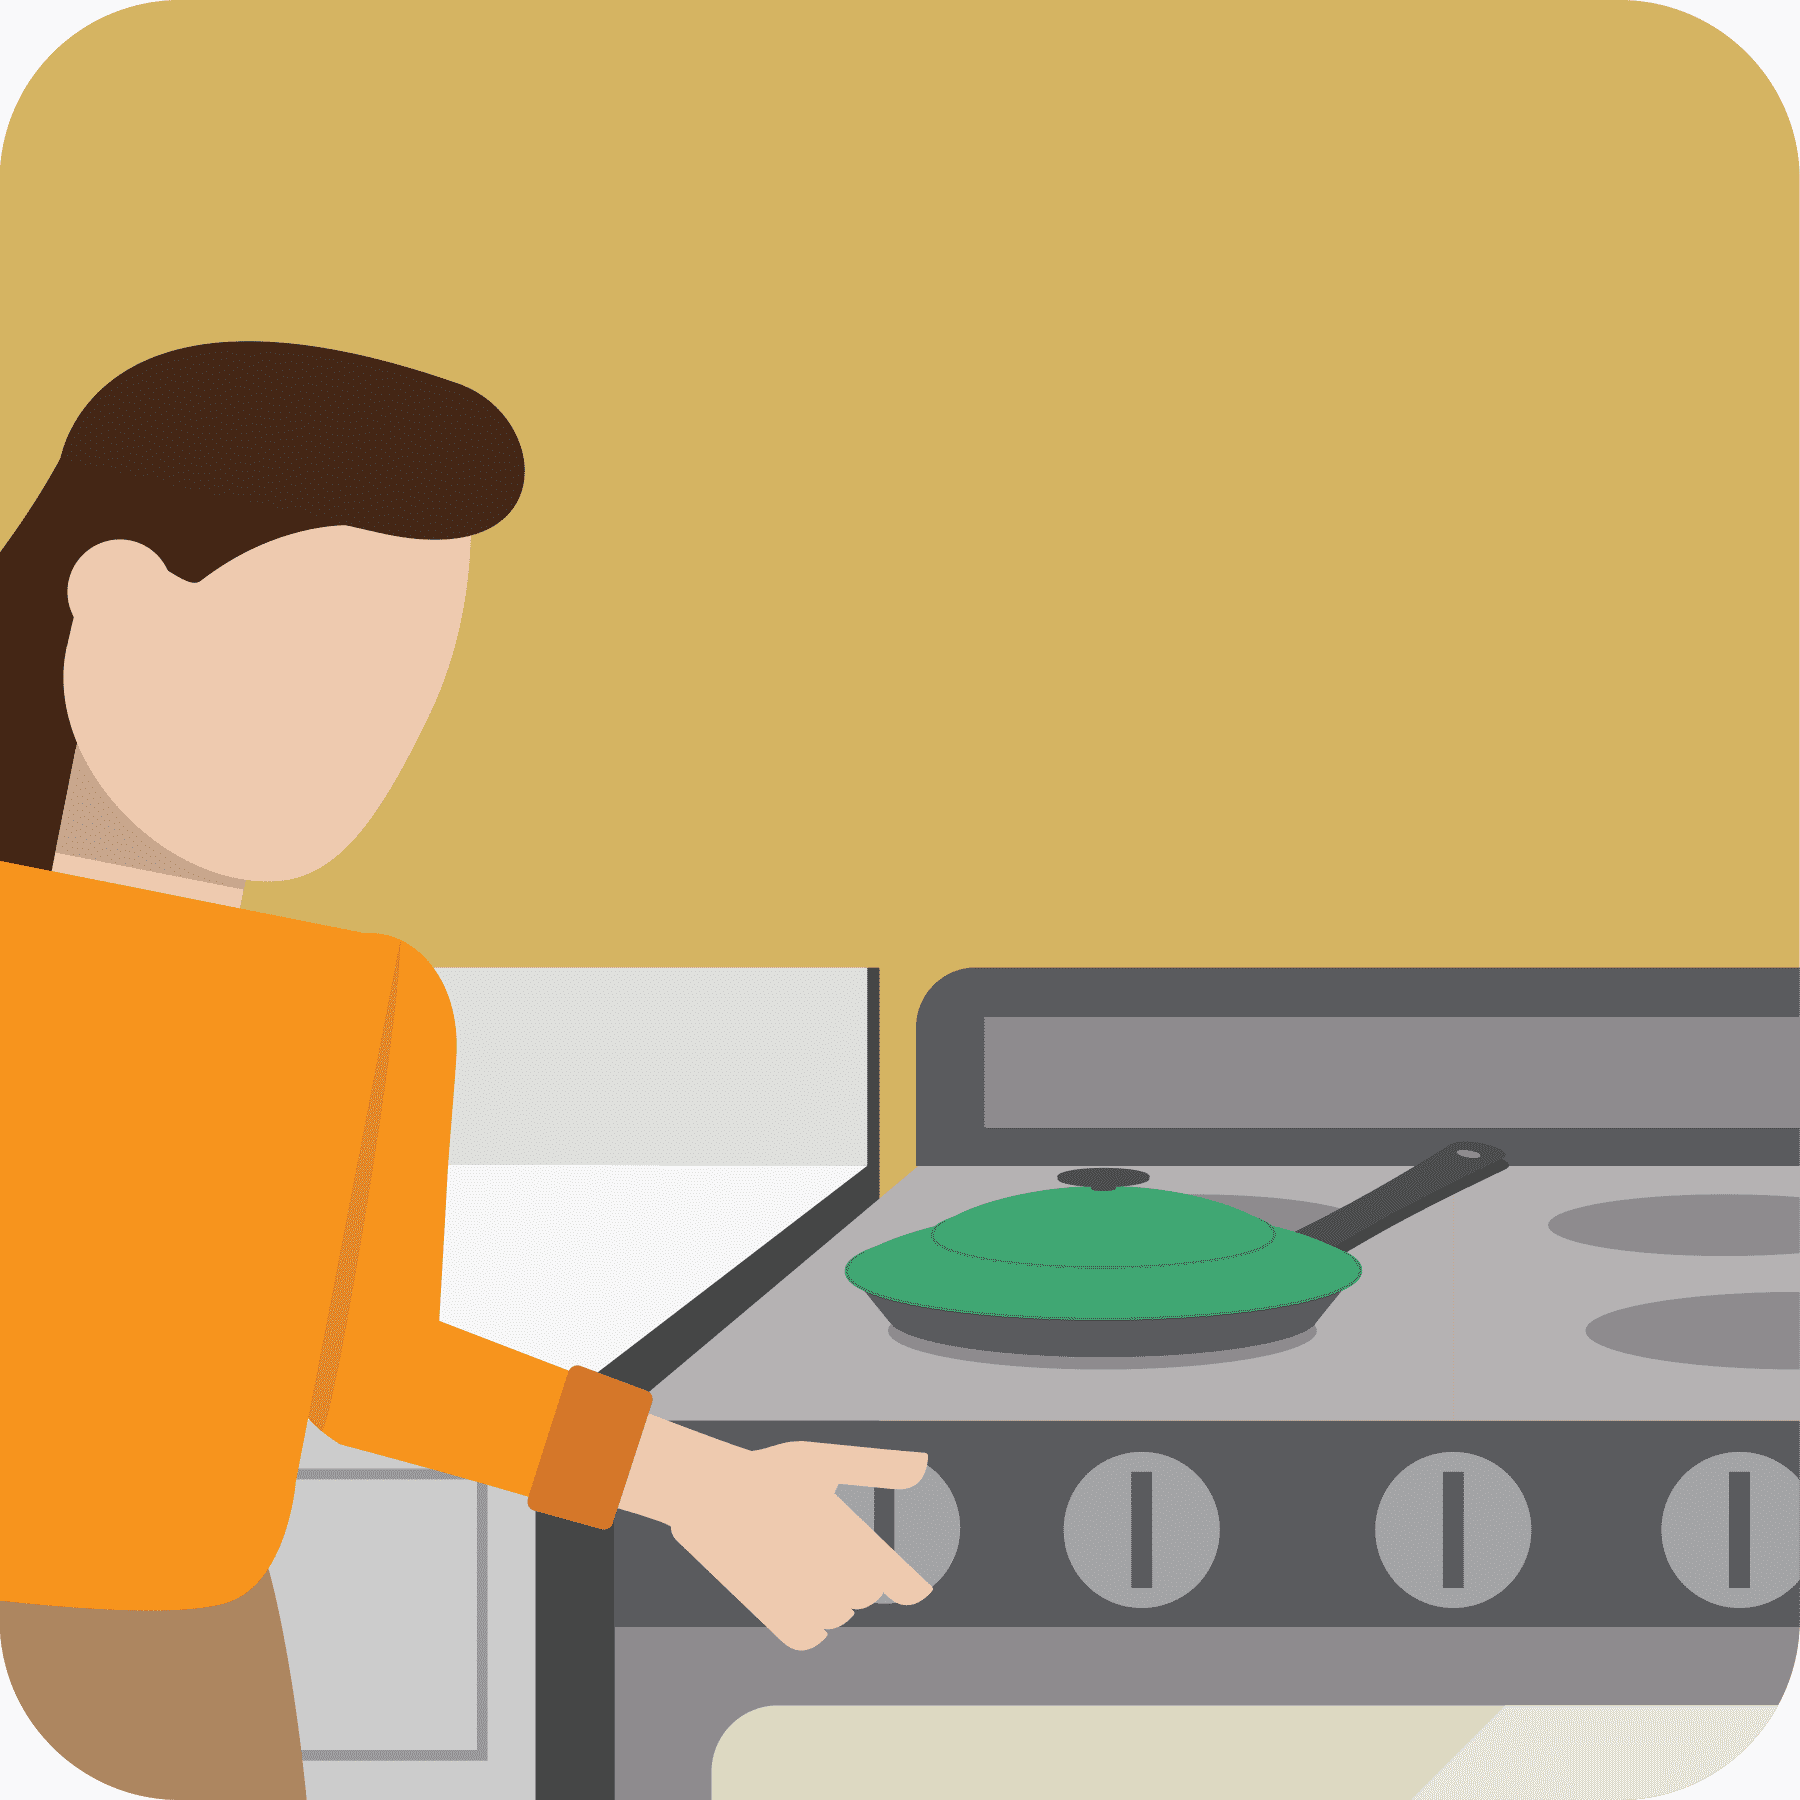 Woman turns off stove burner.